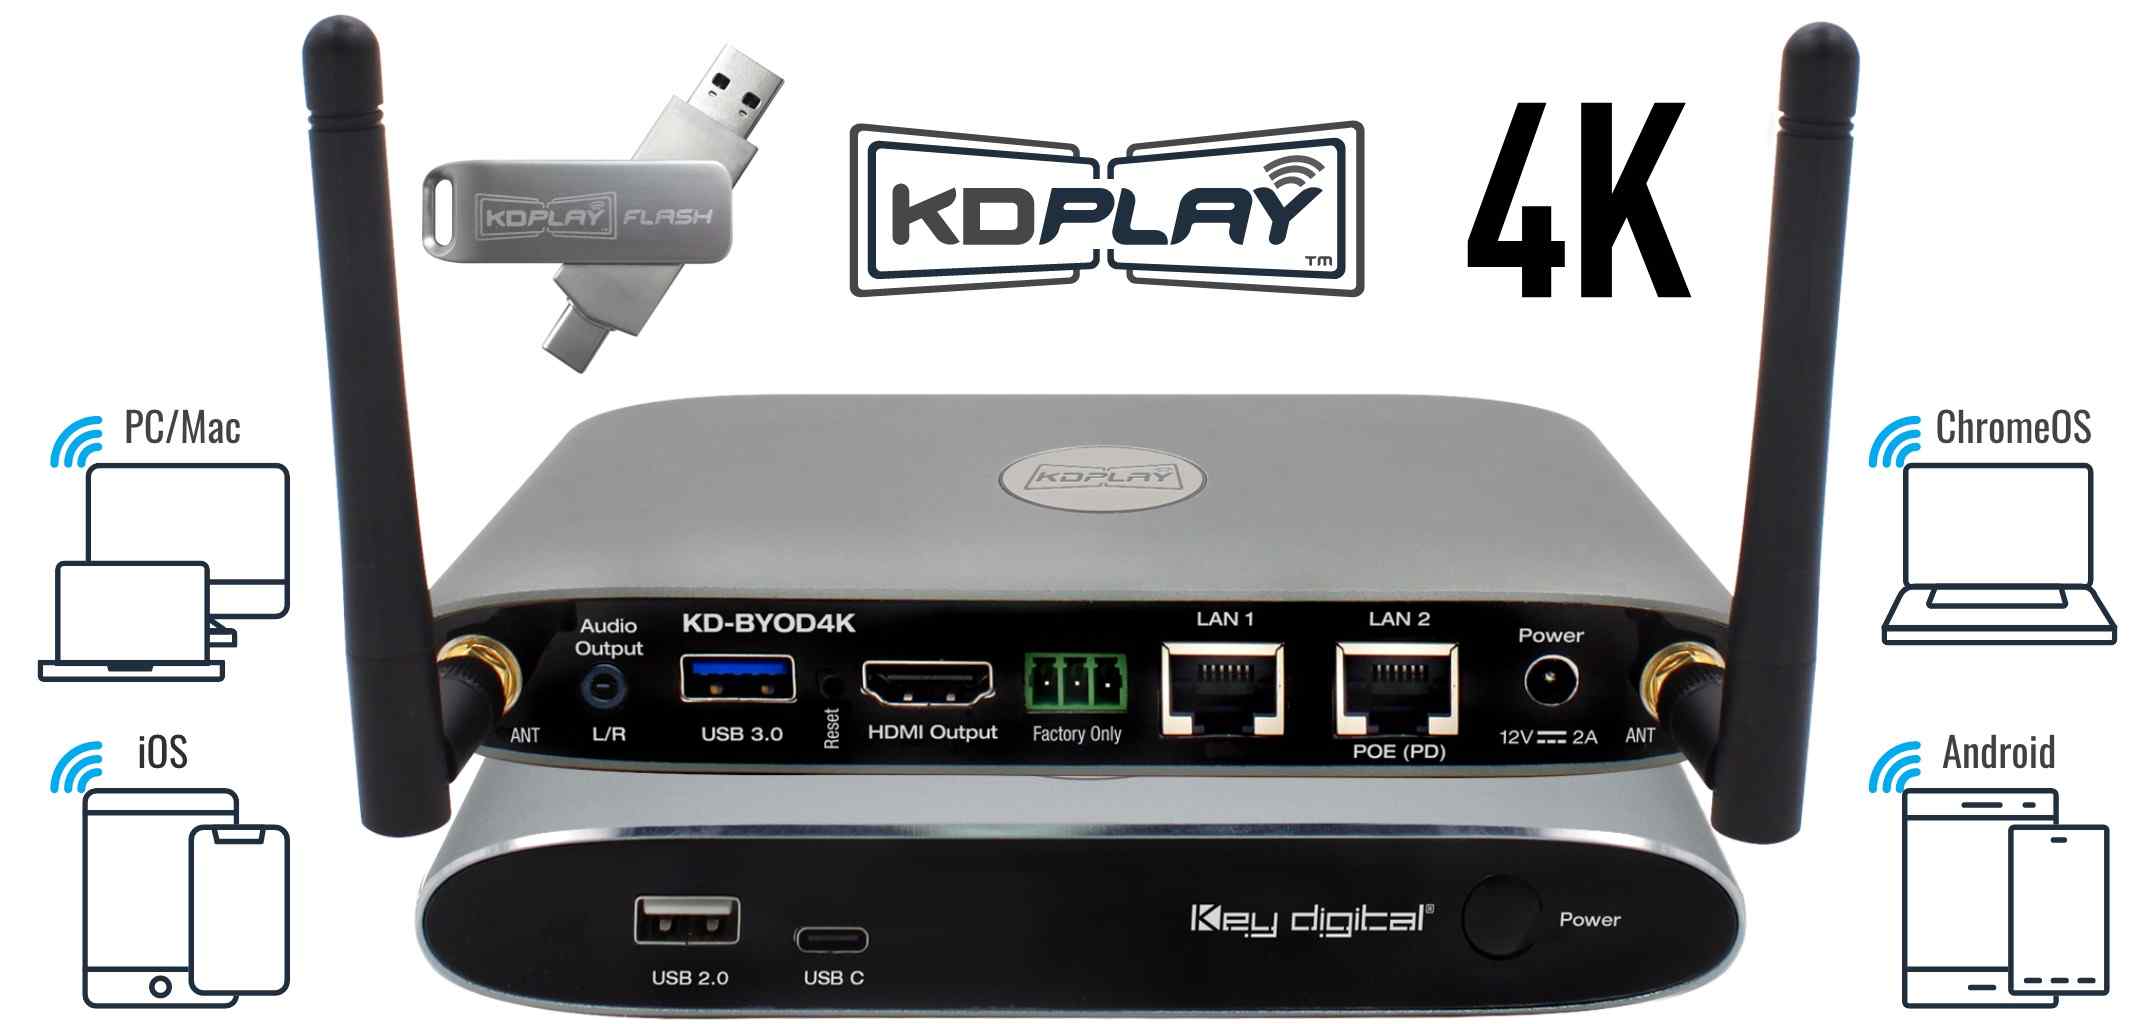 Key Digital 4K wireless presentation gateway front and rear view